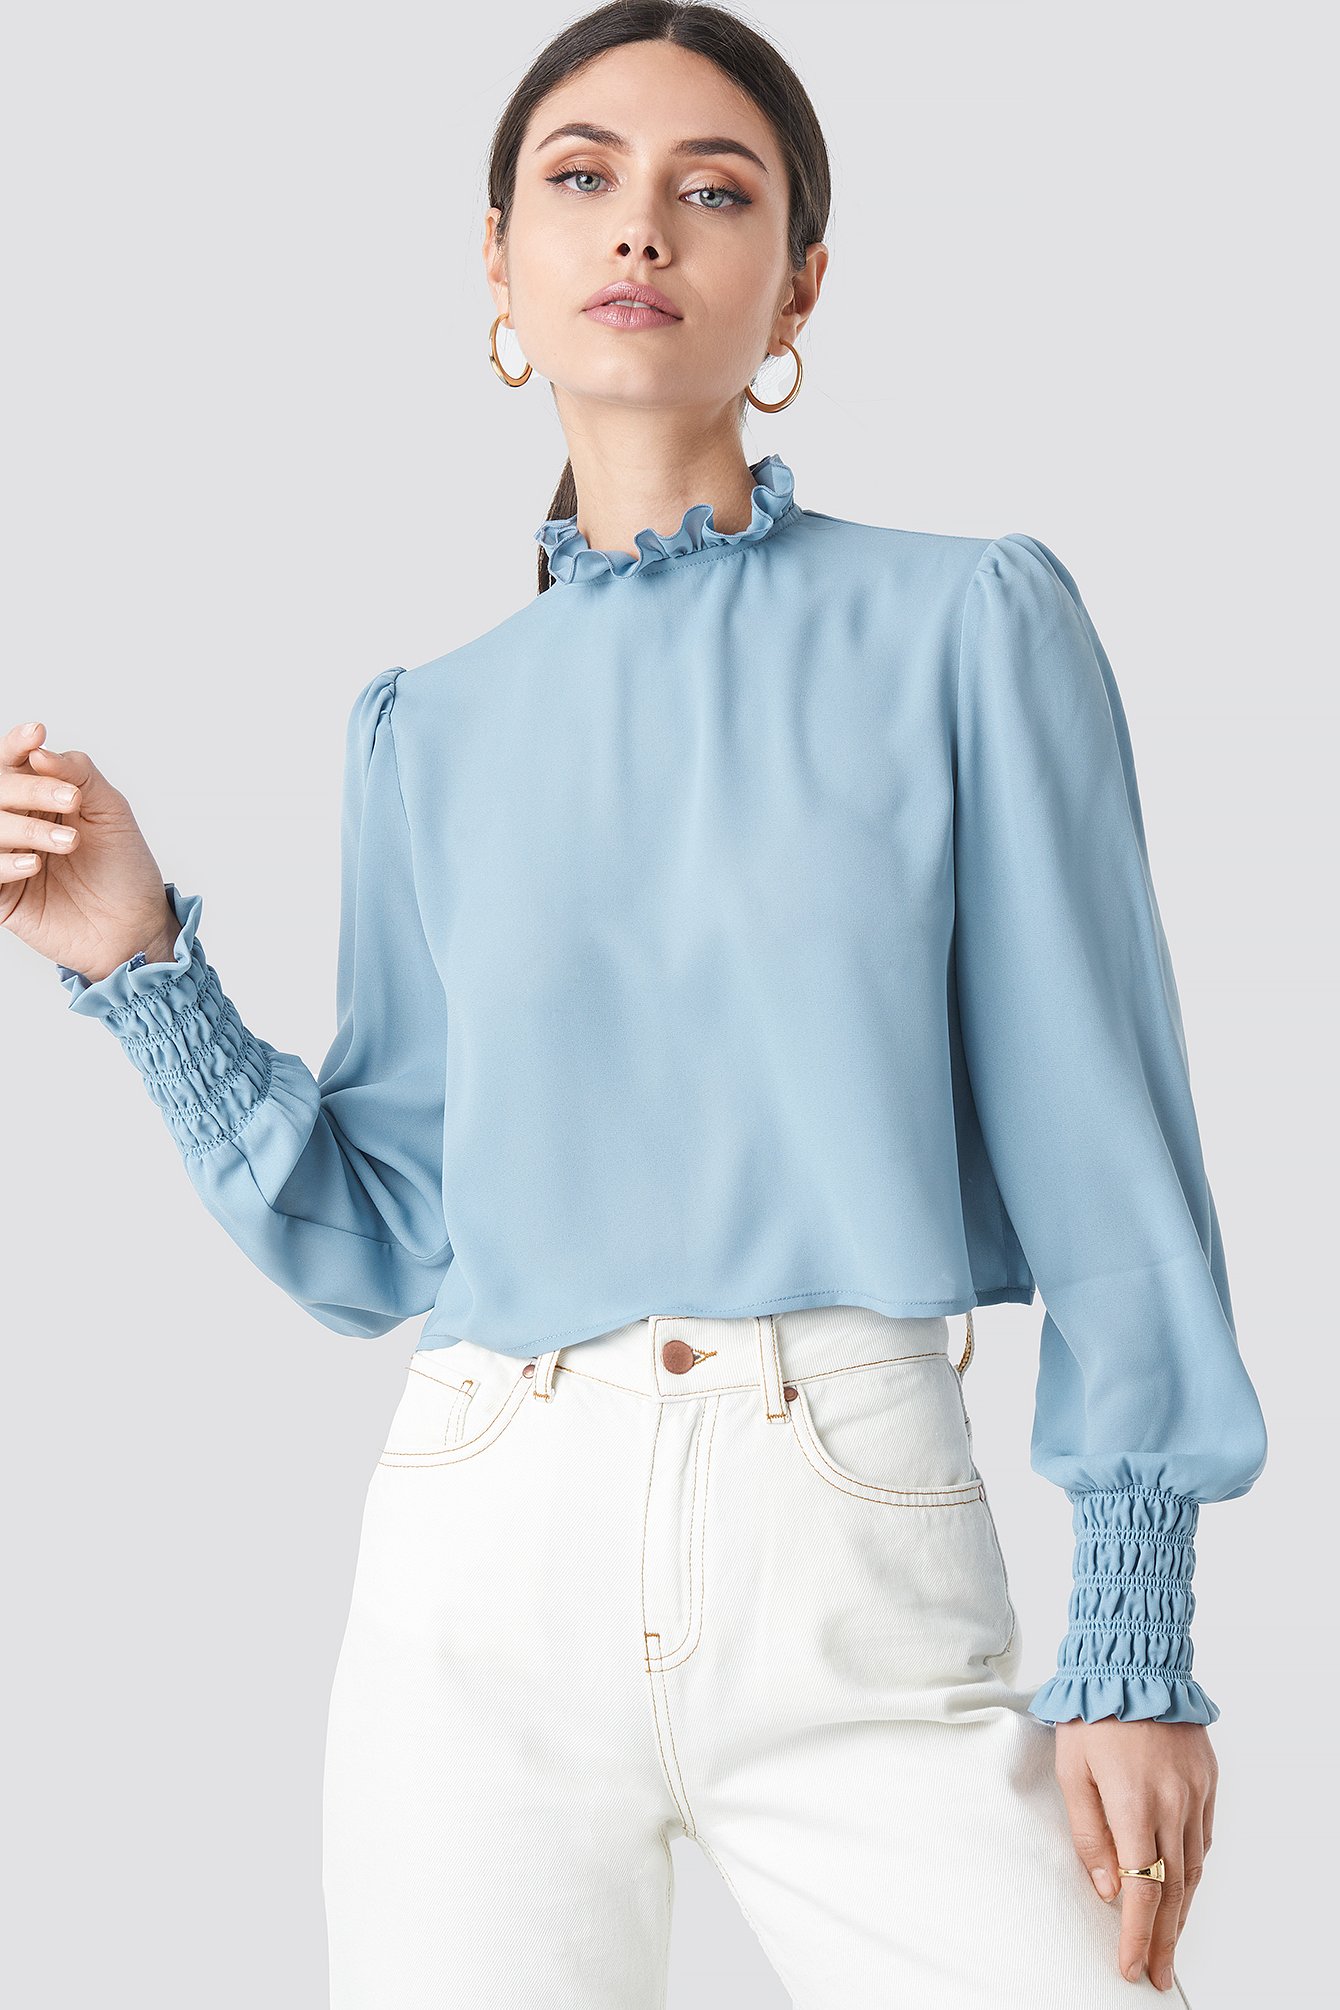 blue high neck blouse